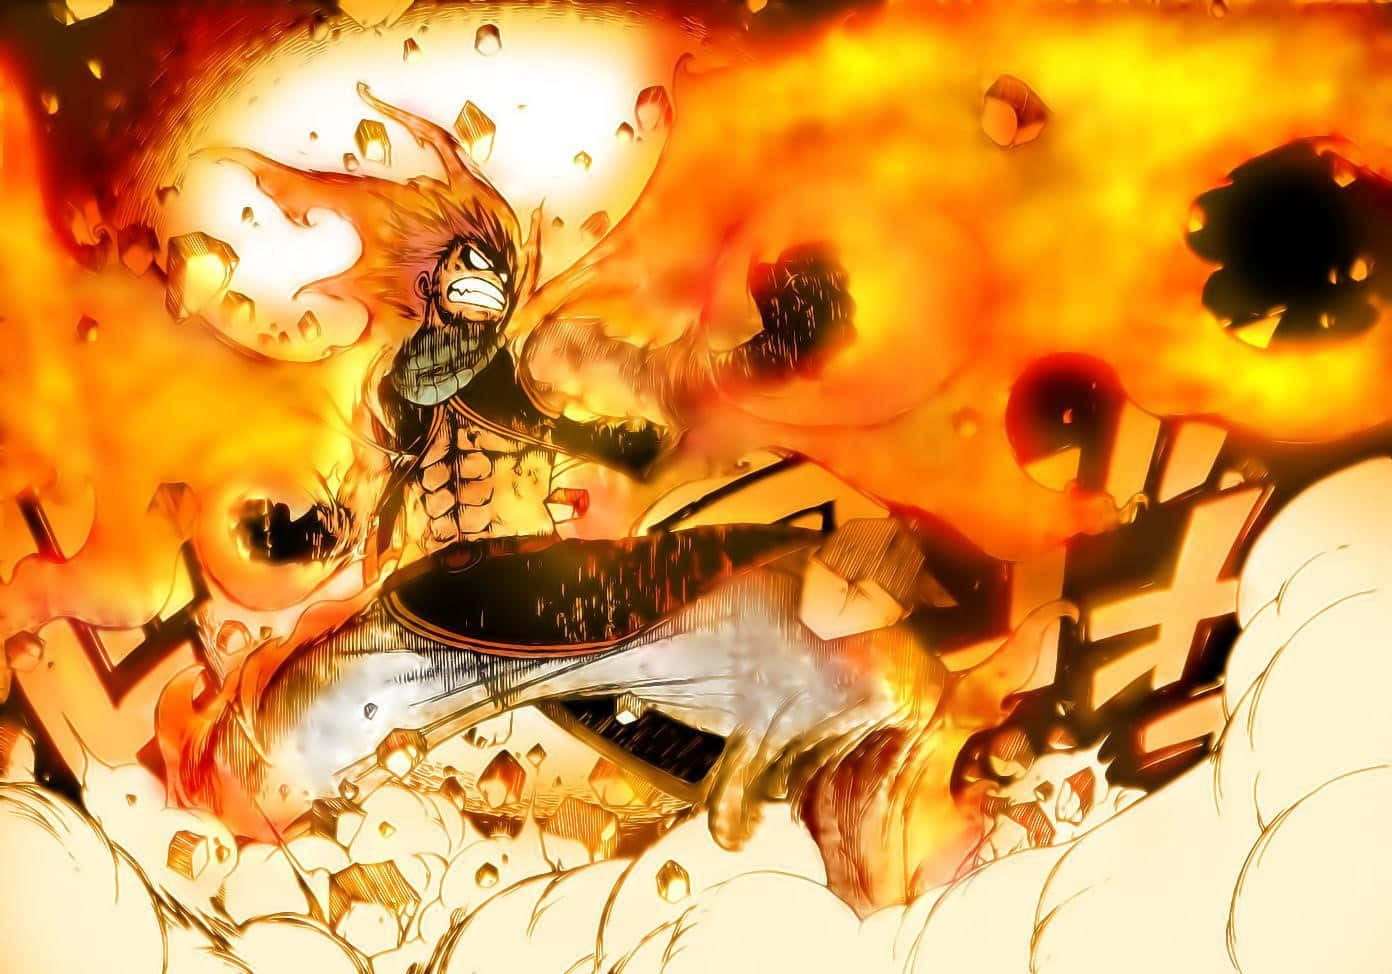 Natsu Dragneel - Fire Dragon Slayer Unleashing Powerful Flames